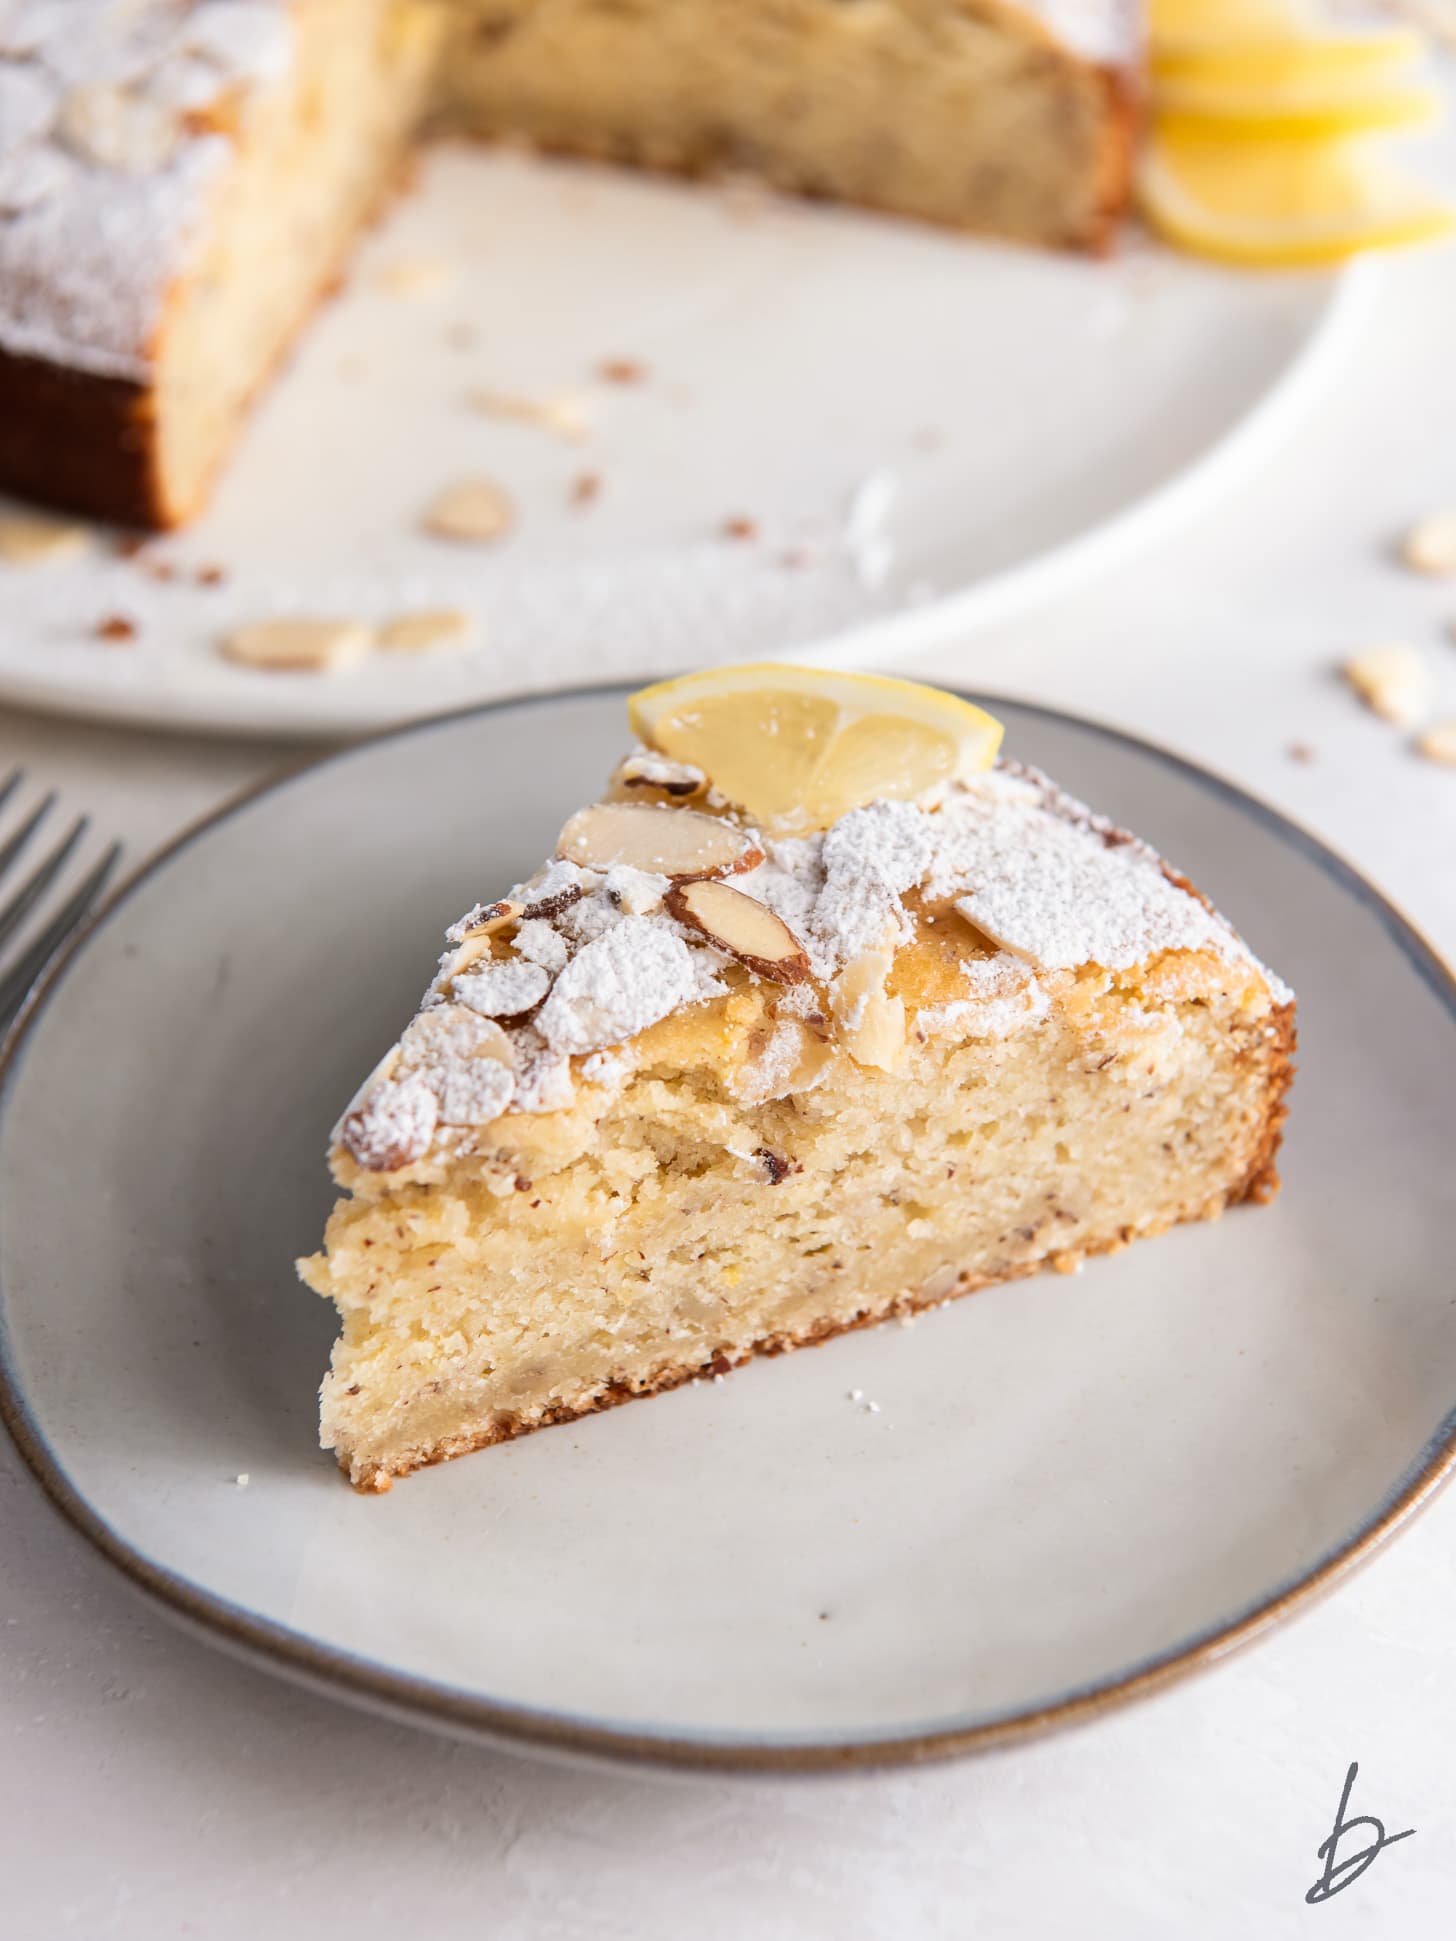 slice of lemon ricotta cake garnished with confectioners' sugar and lemon slice.